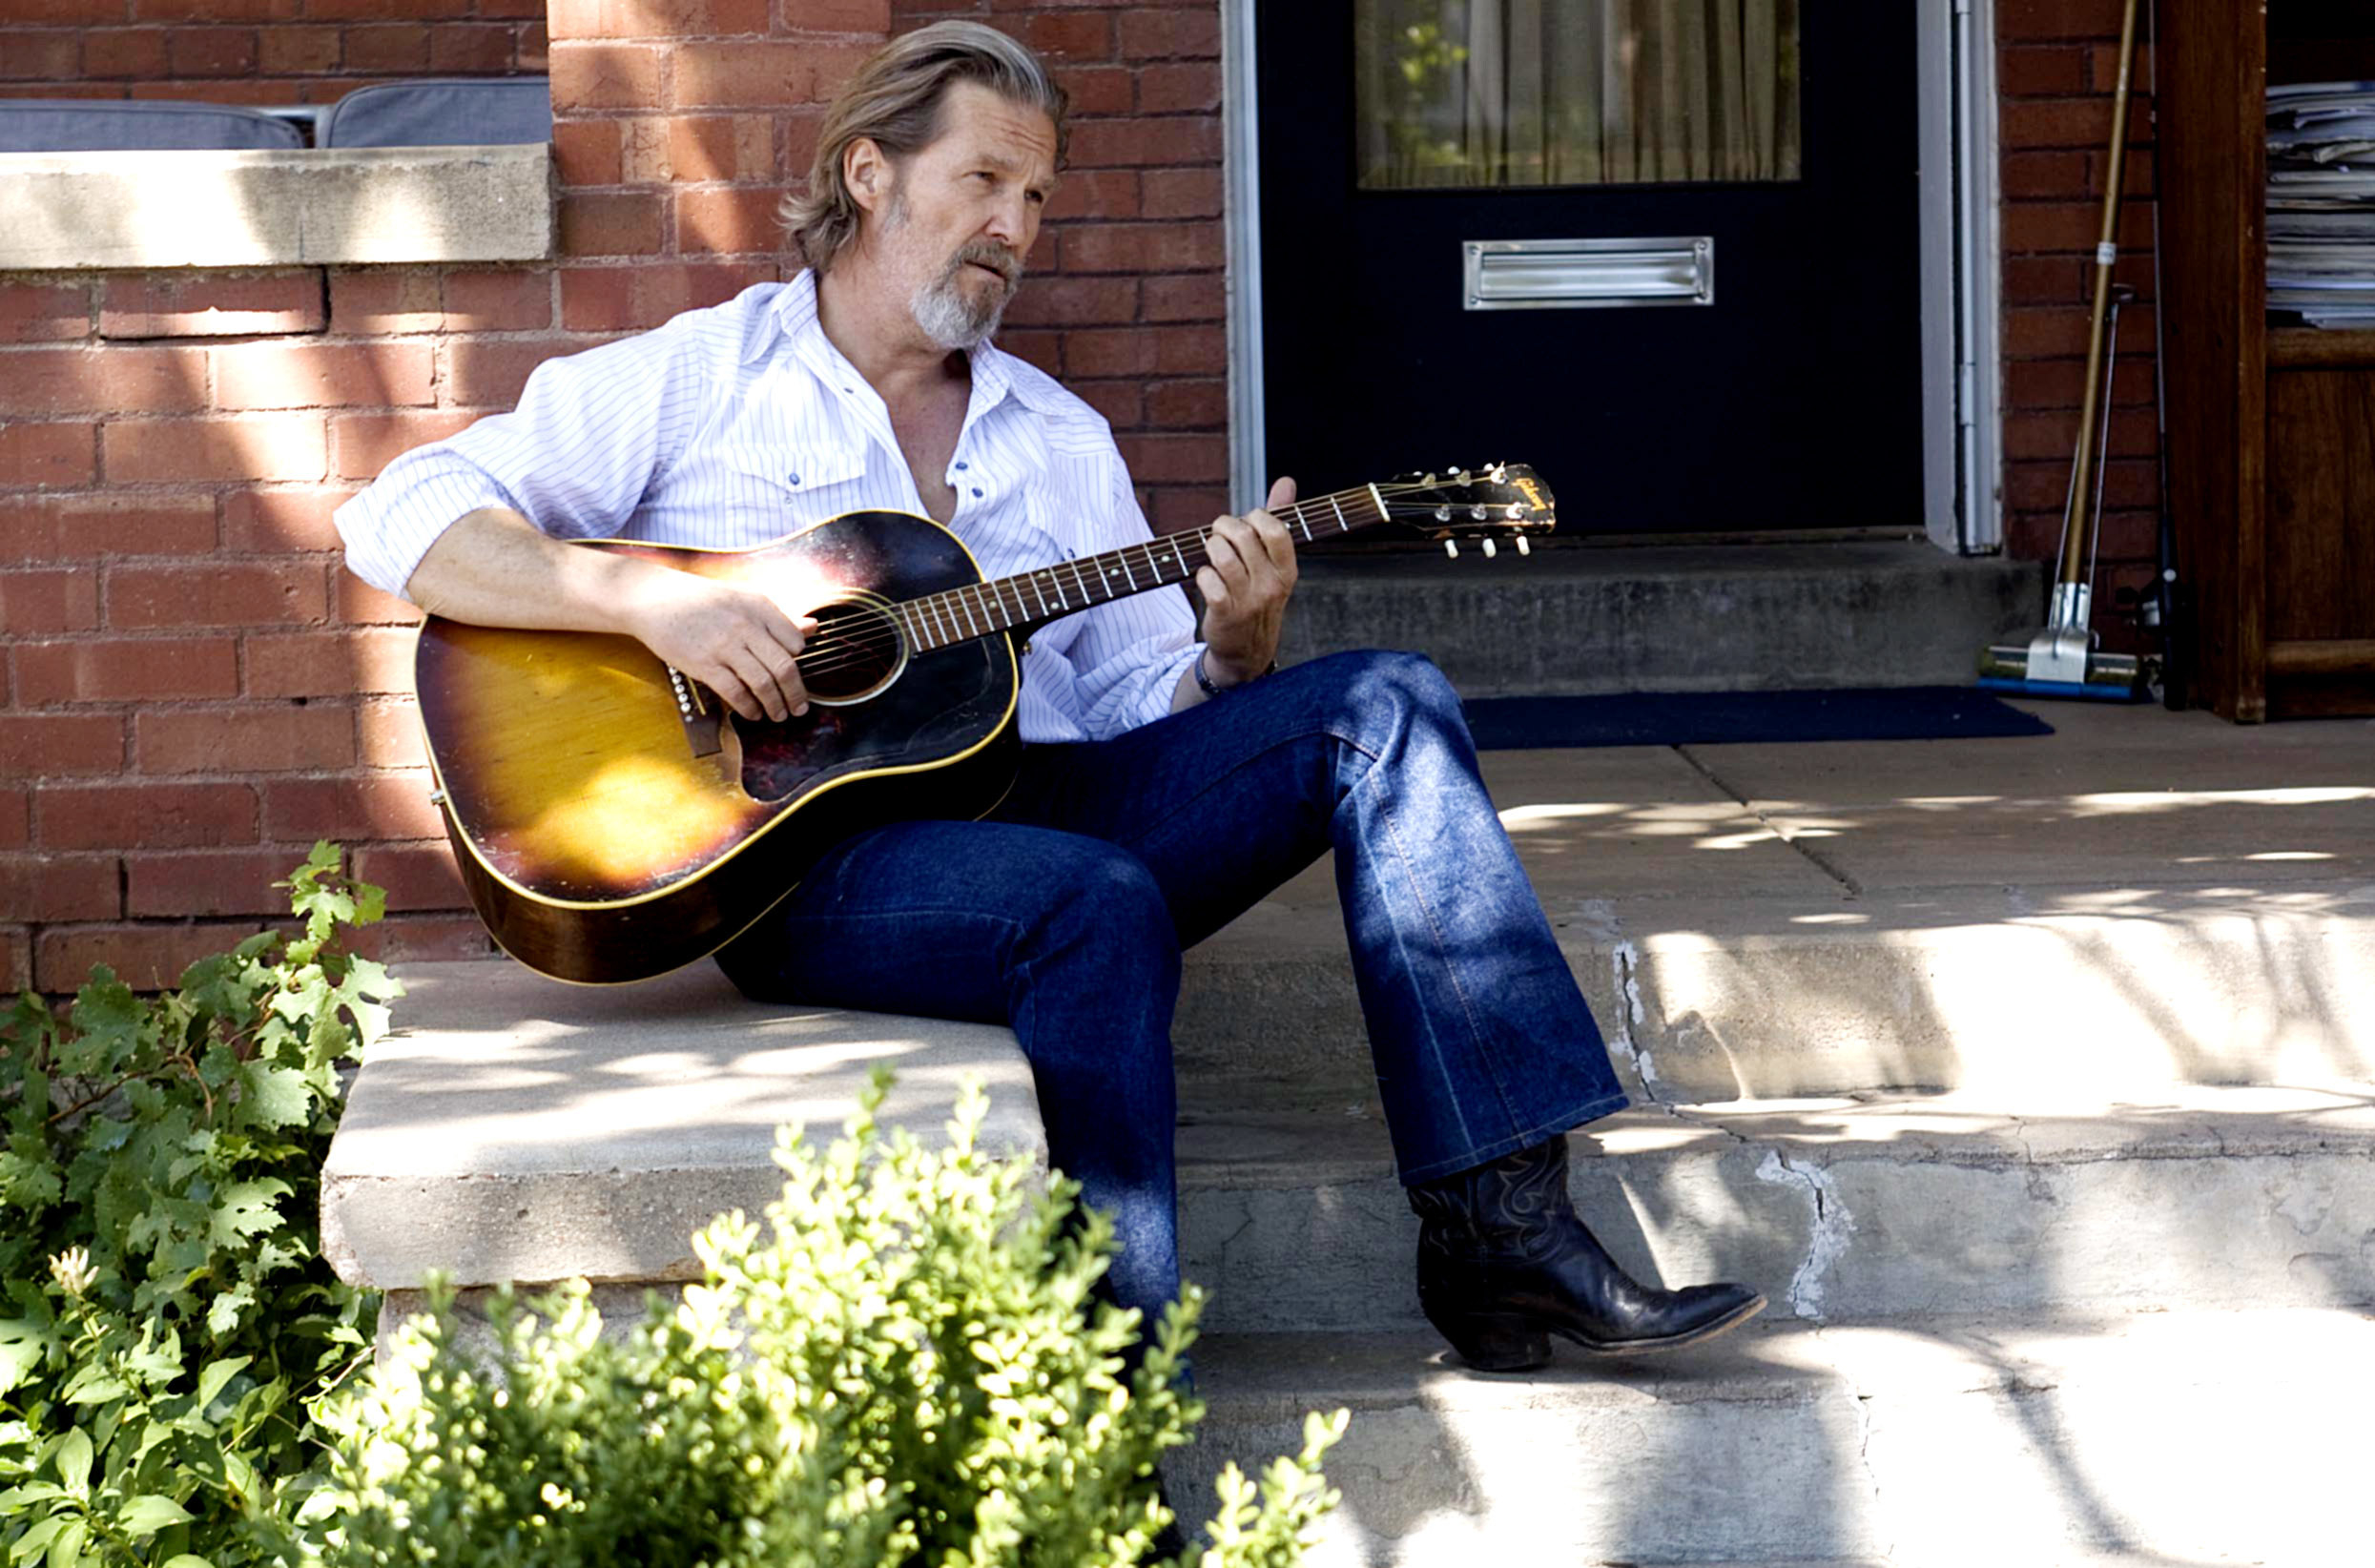 Jeff Bridges plays the guitar on a stoop